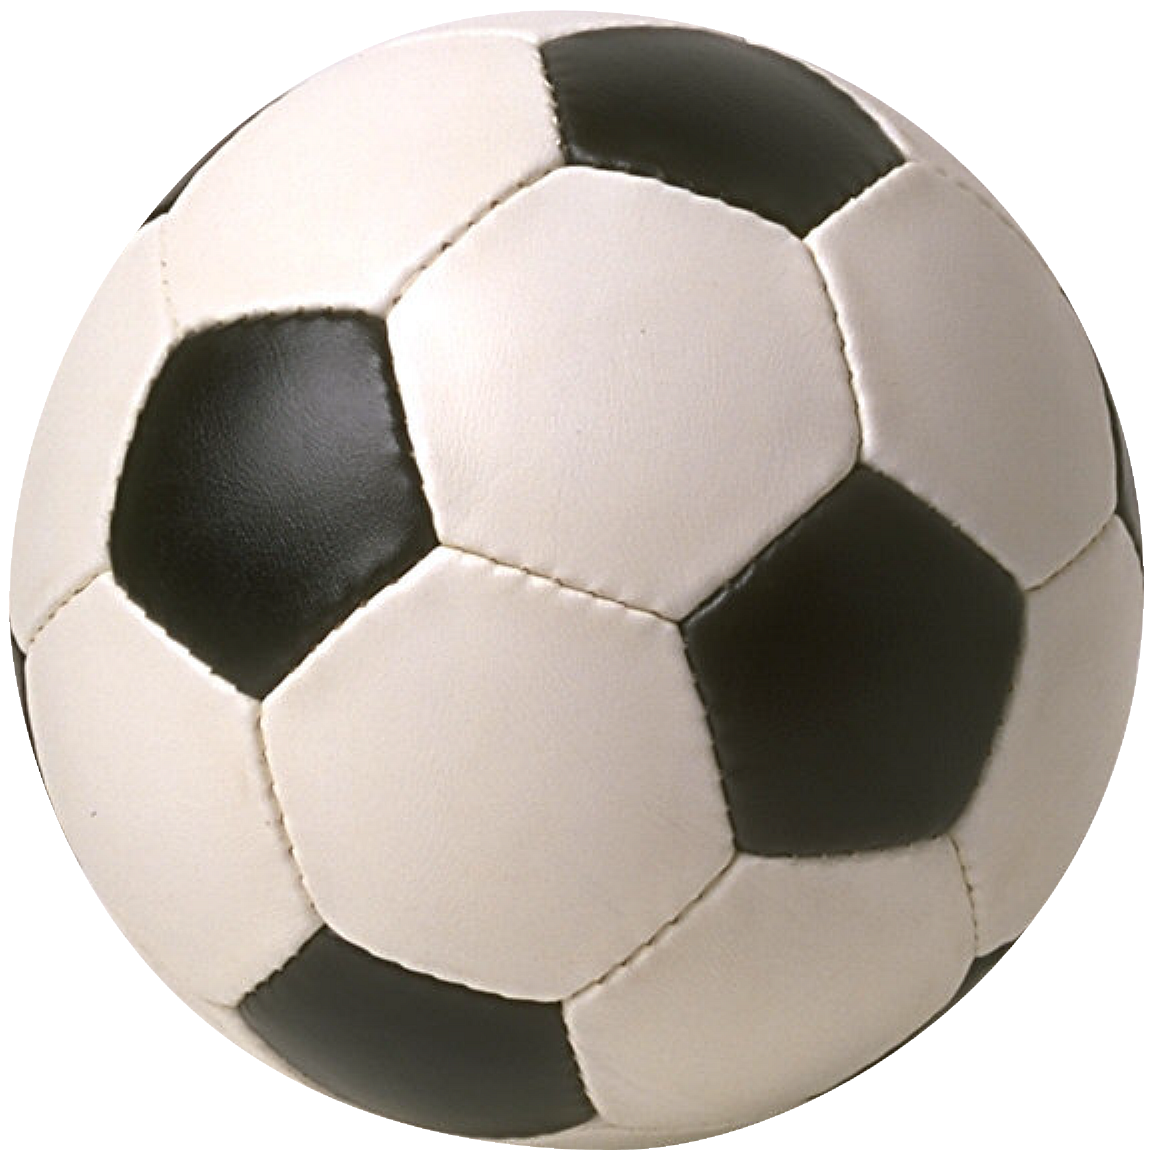 Football PNG Image